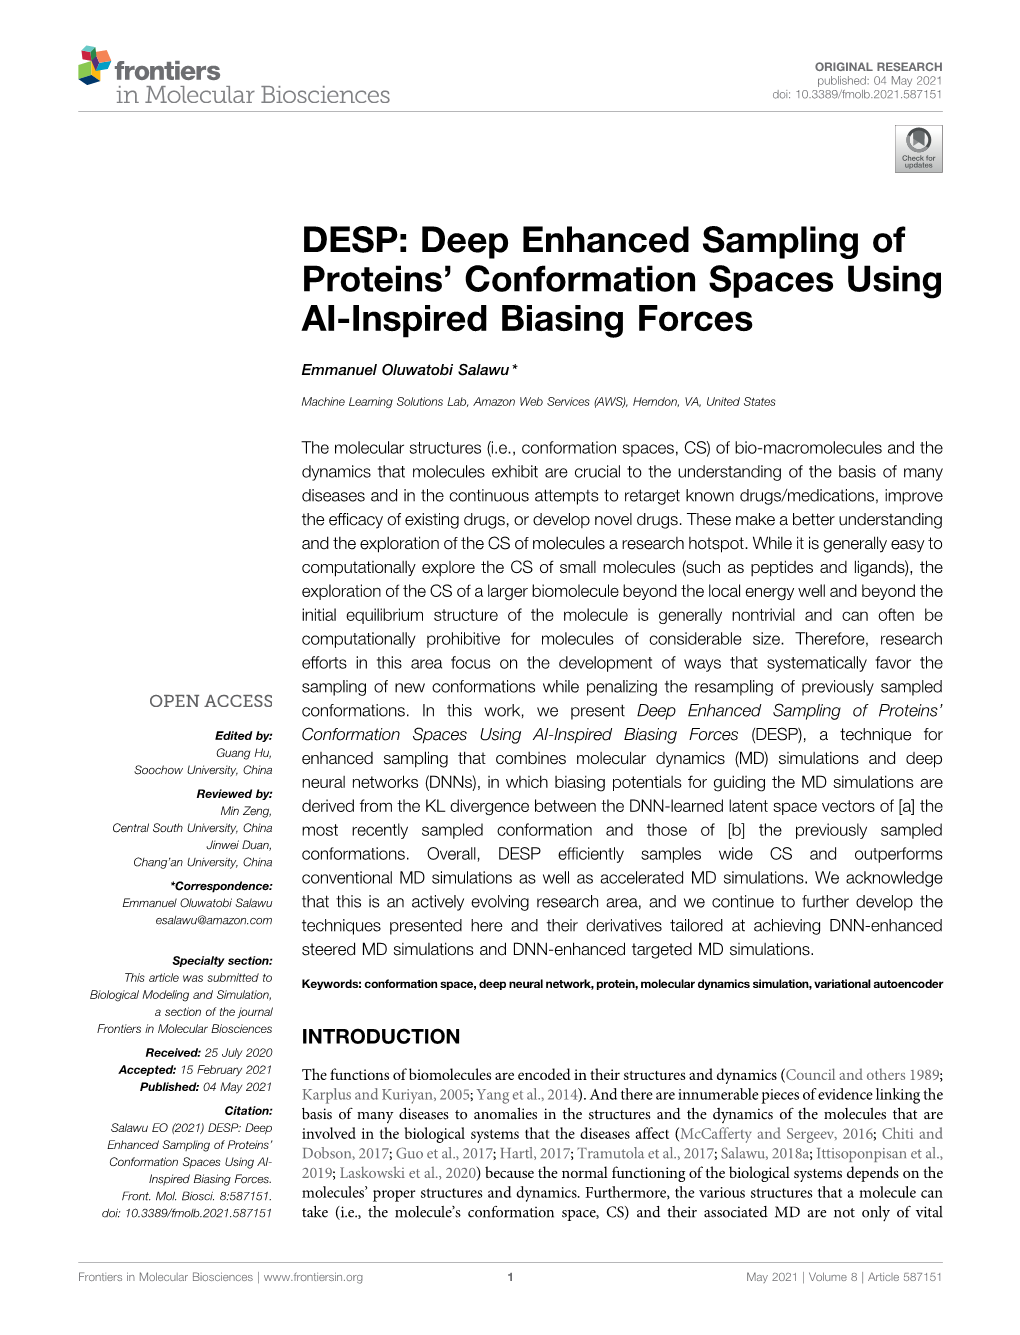 DESP: Deep Enhanced Sampling of Proteins' Conformation Spaces